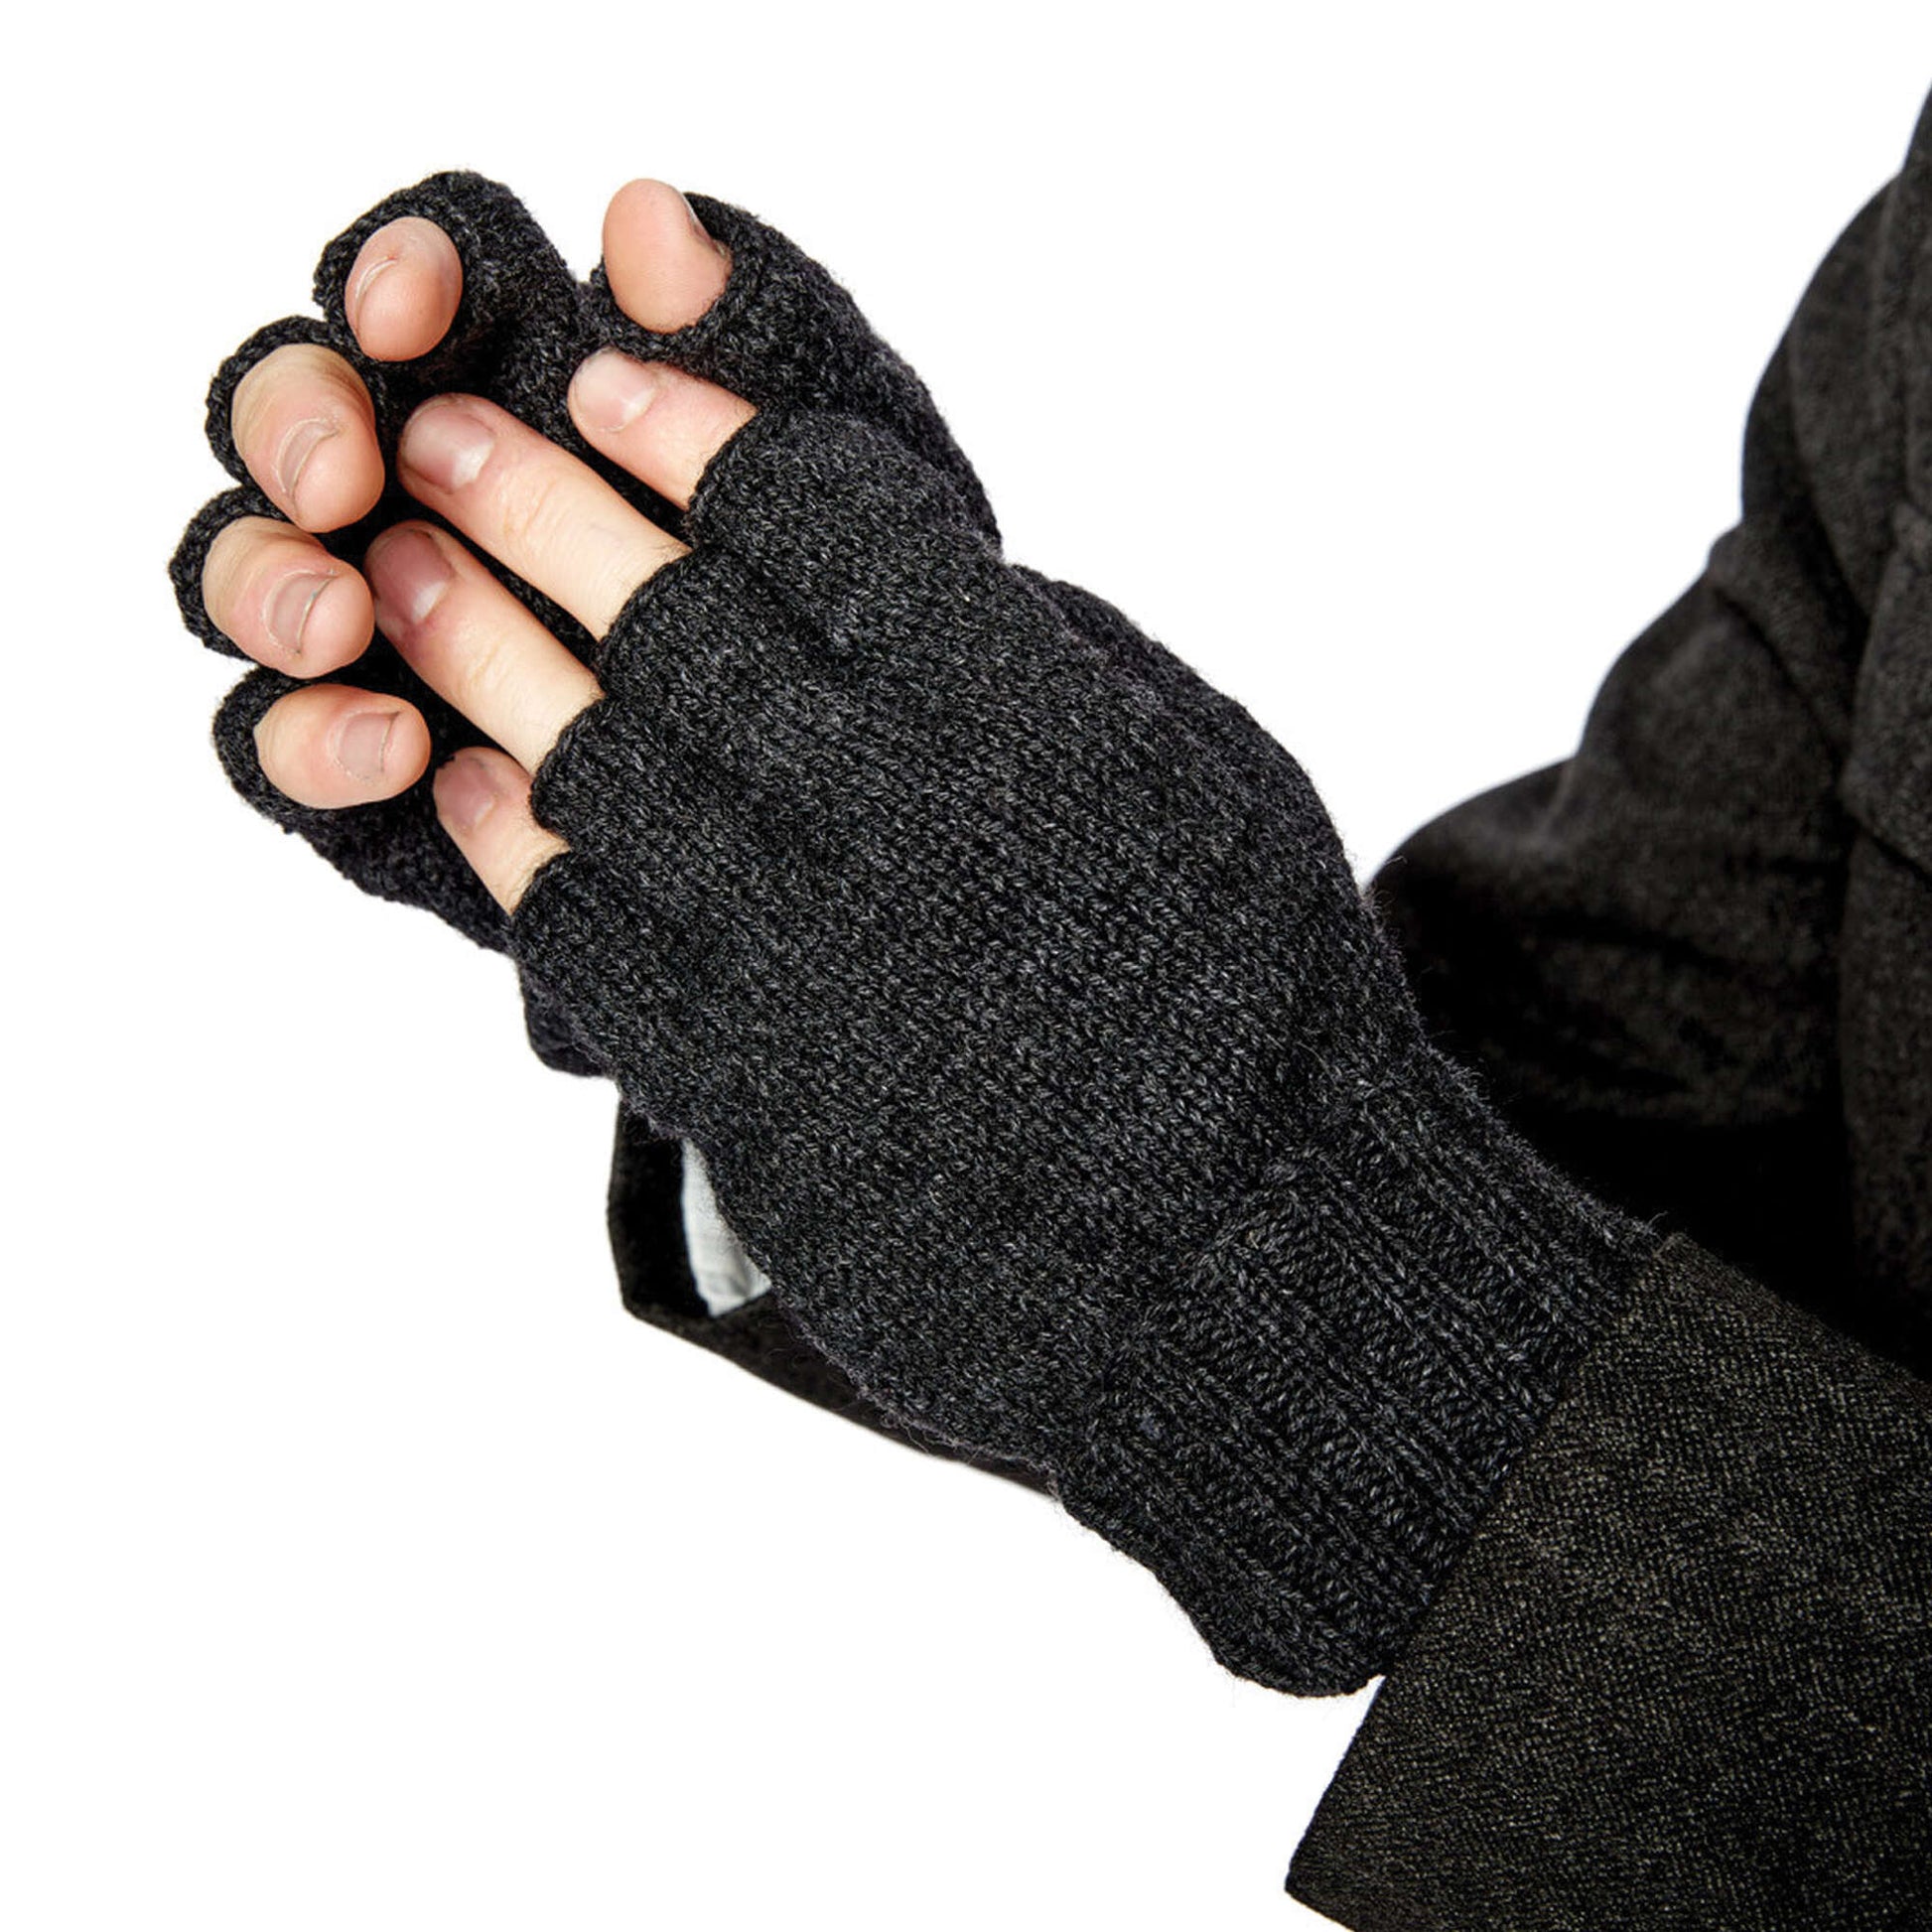 Free Patons Fingerless Knit Gloves Pattern